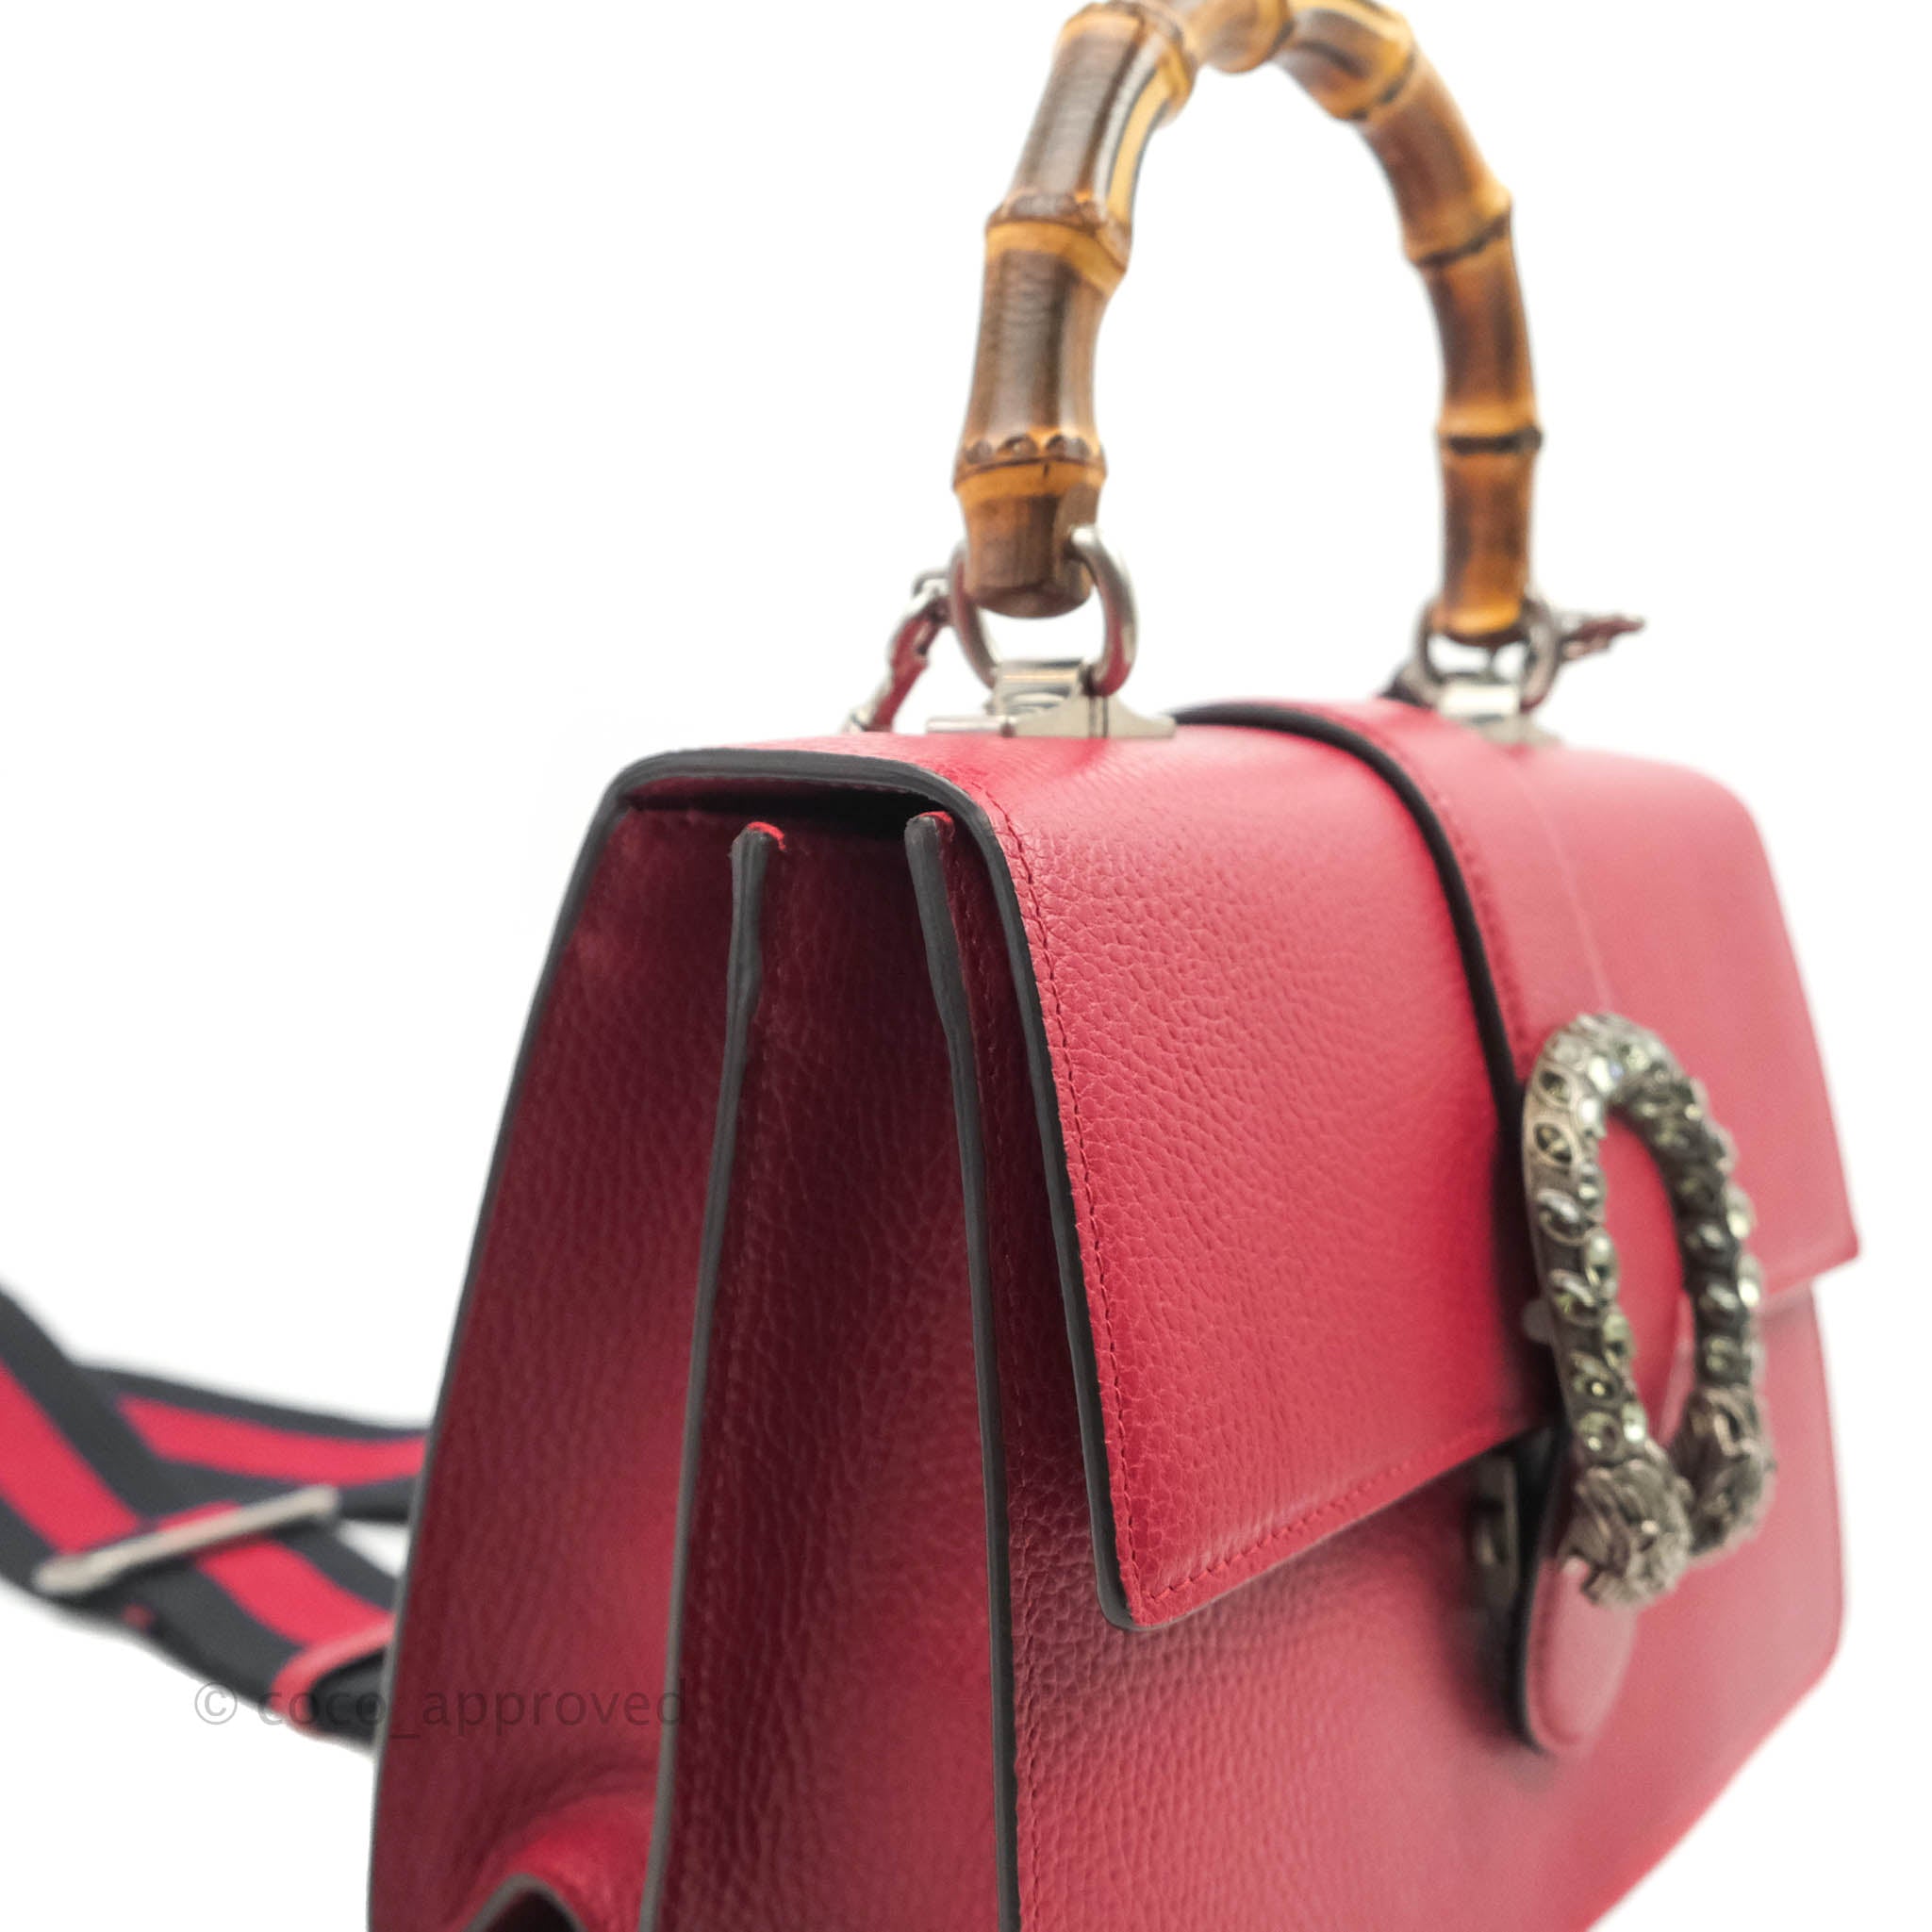 GUCCI Dionysus Medium Bamboo Web Top Handle Calfskin Leather Bag Red $3750  Strap